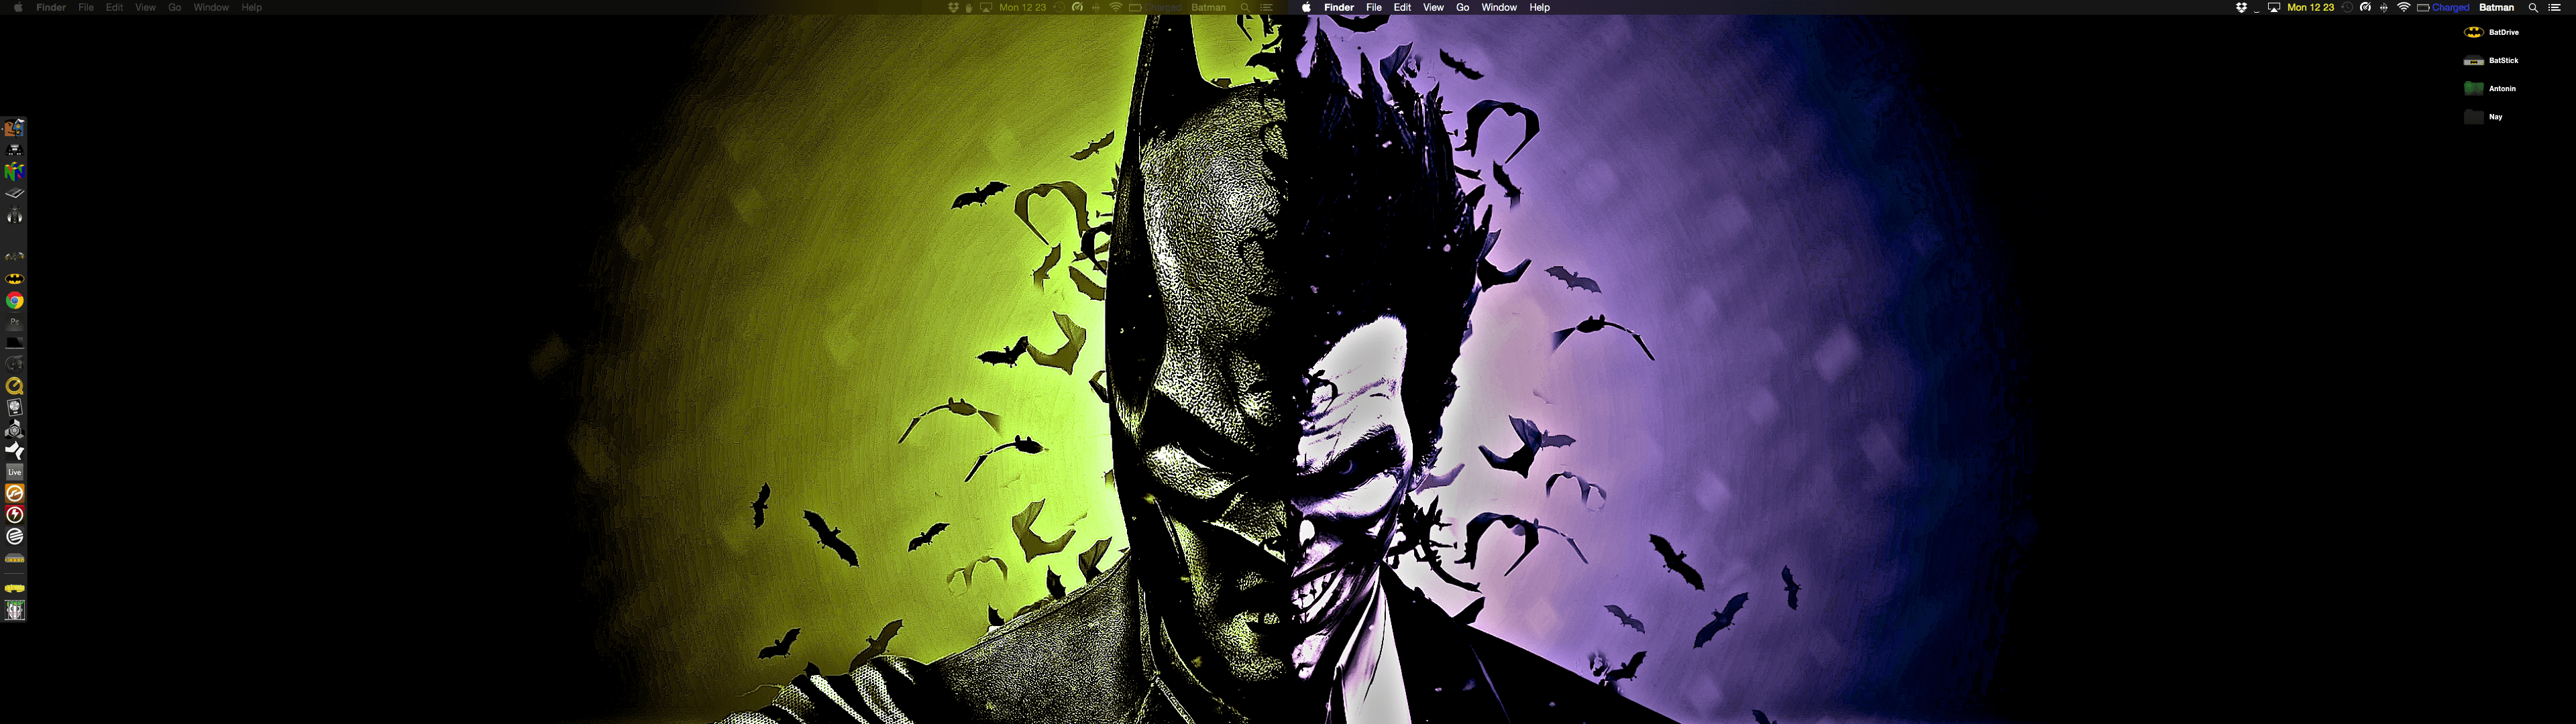 Batman Dual Screen Wallpapers Top Free Batman Dual Screen Backgrounds Wallpaperaccess